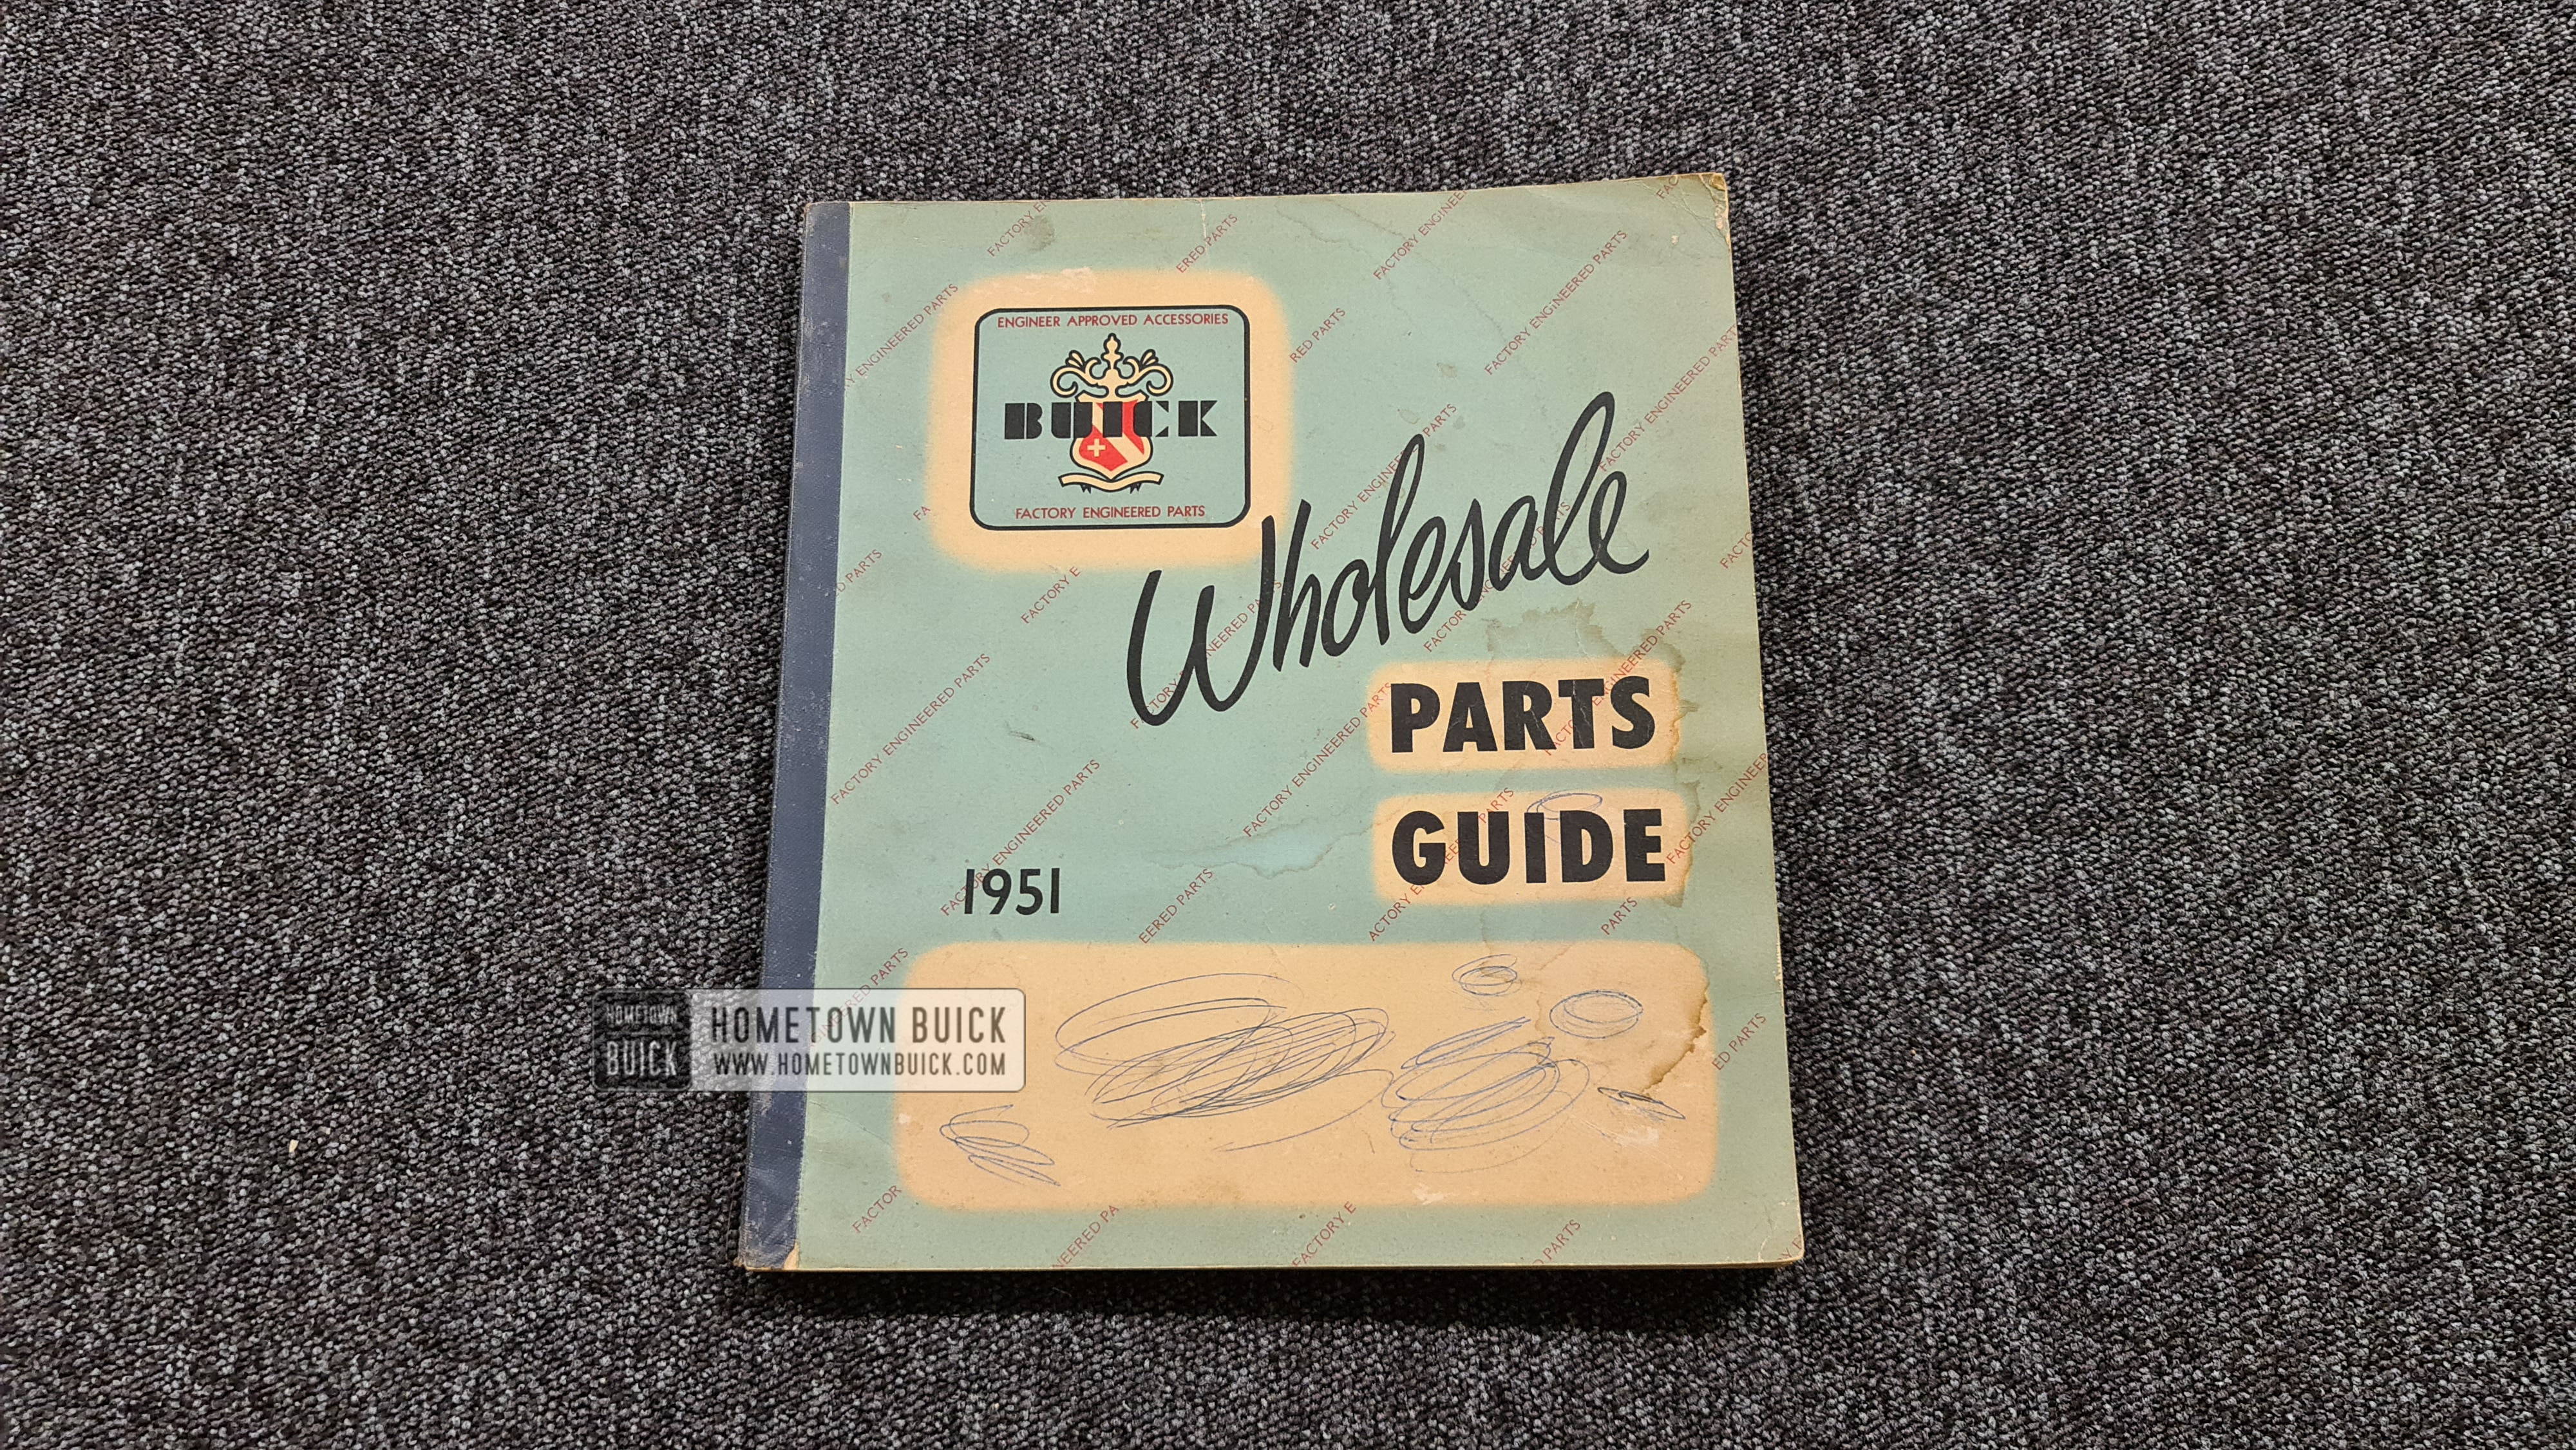 1951 Buick Wholesale Parts Guide (ORIGINAL) - Hometown Buick